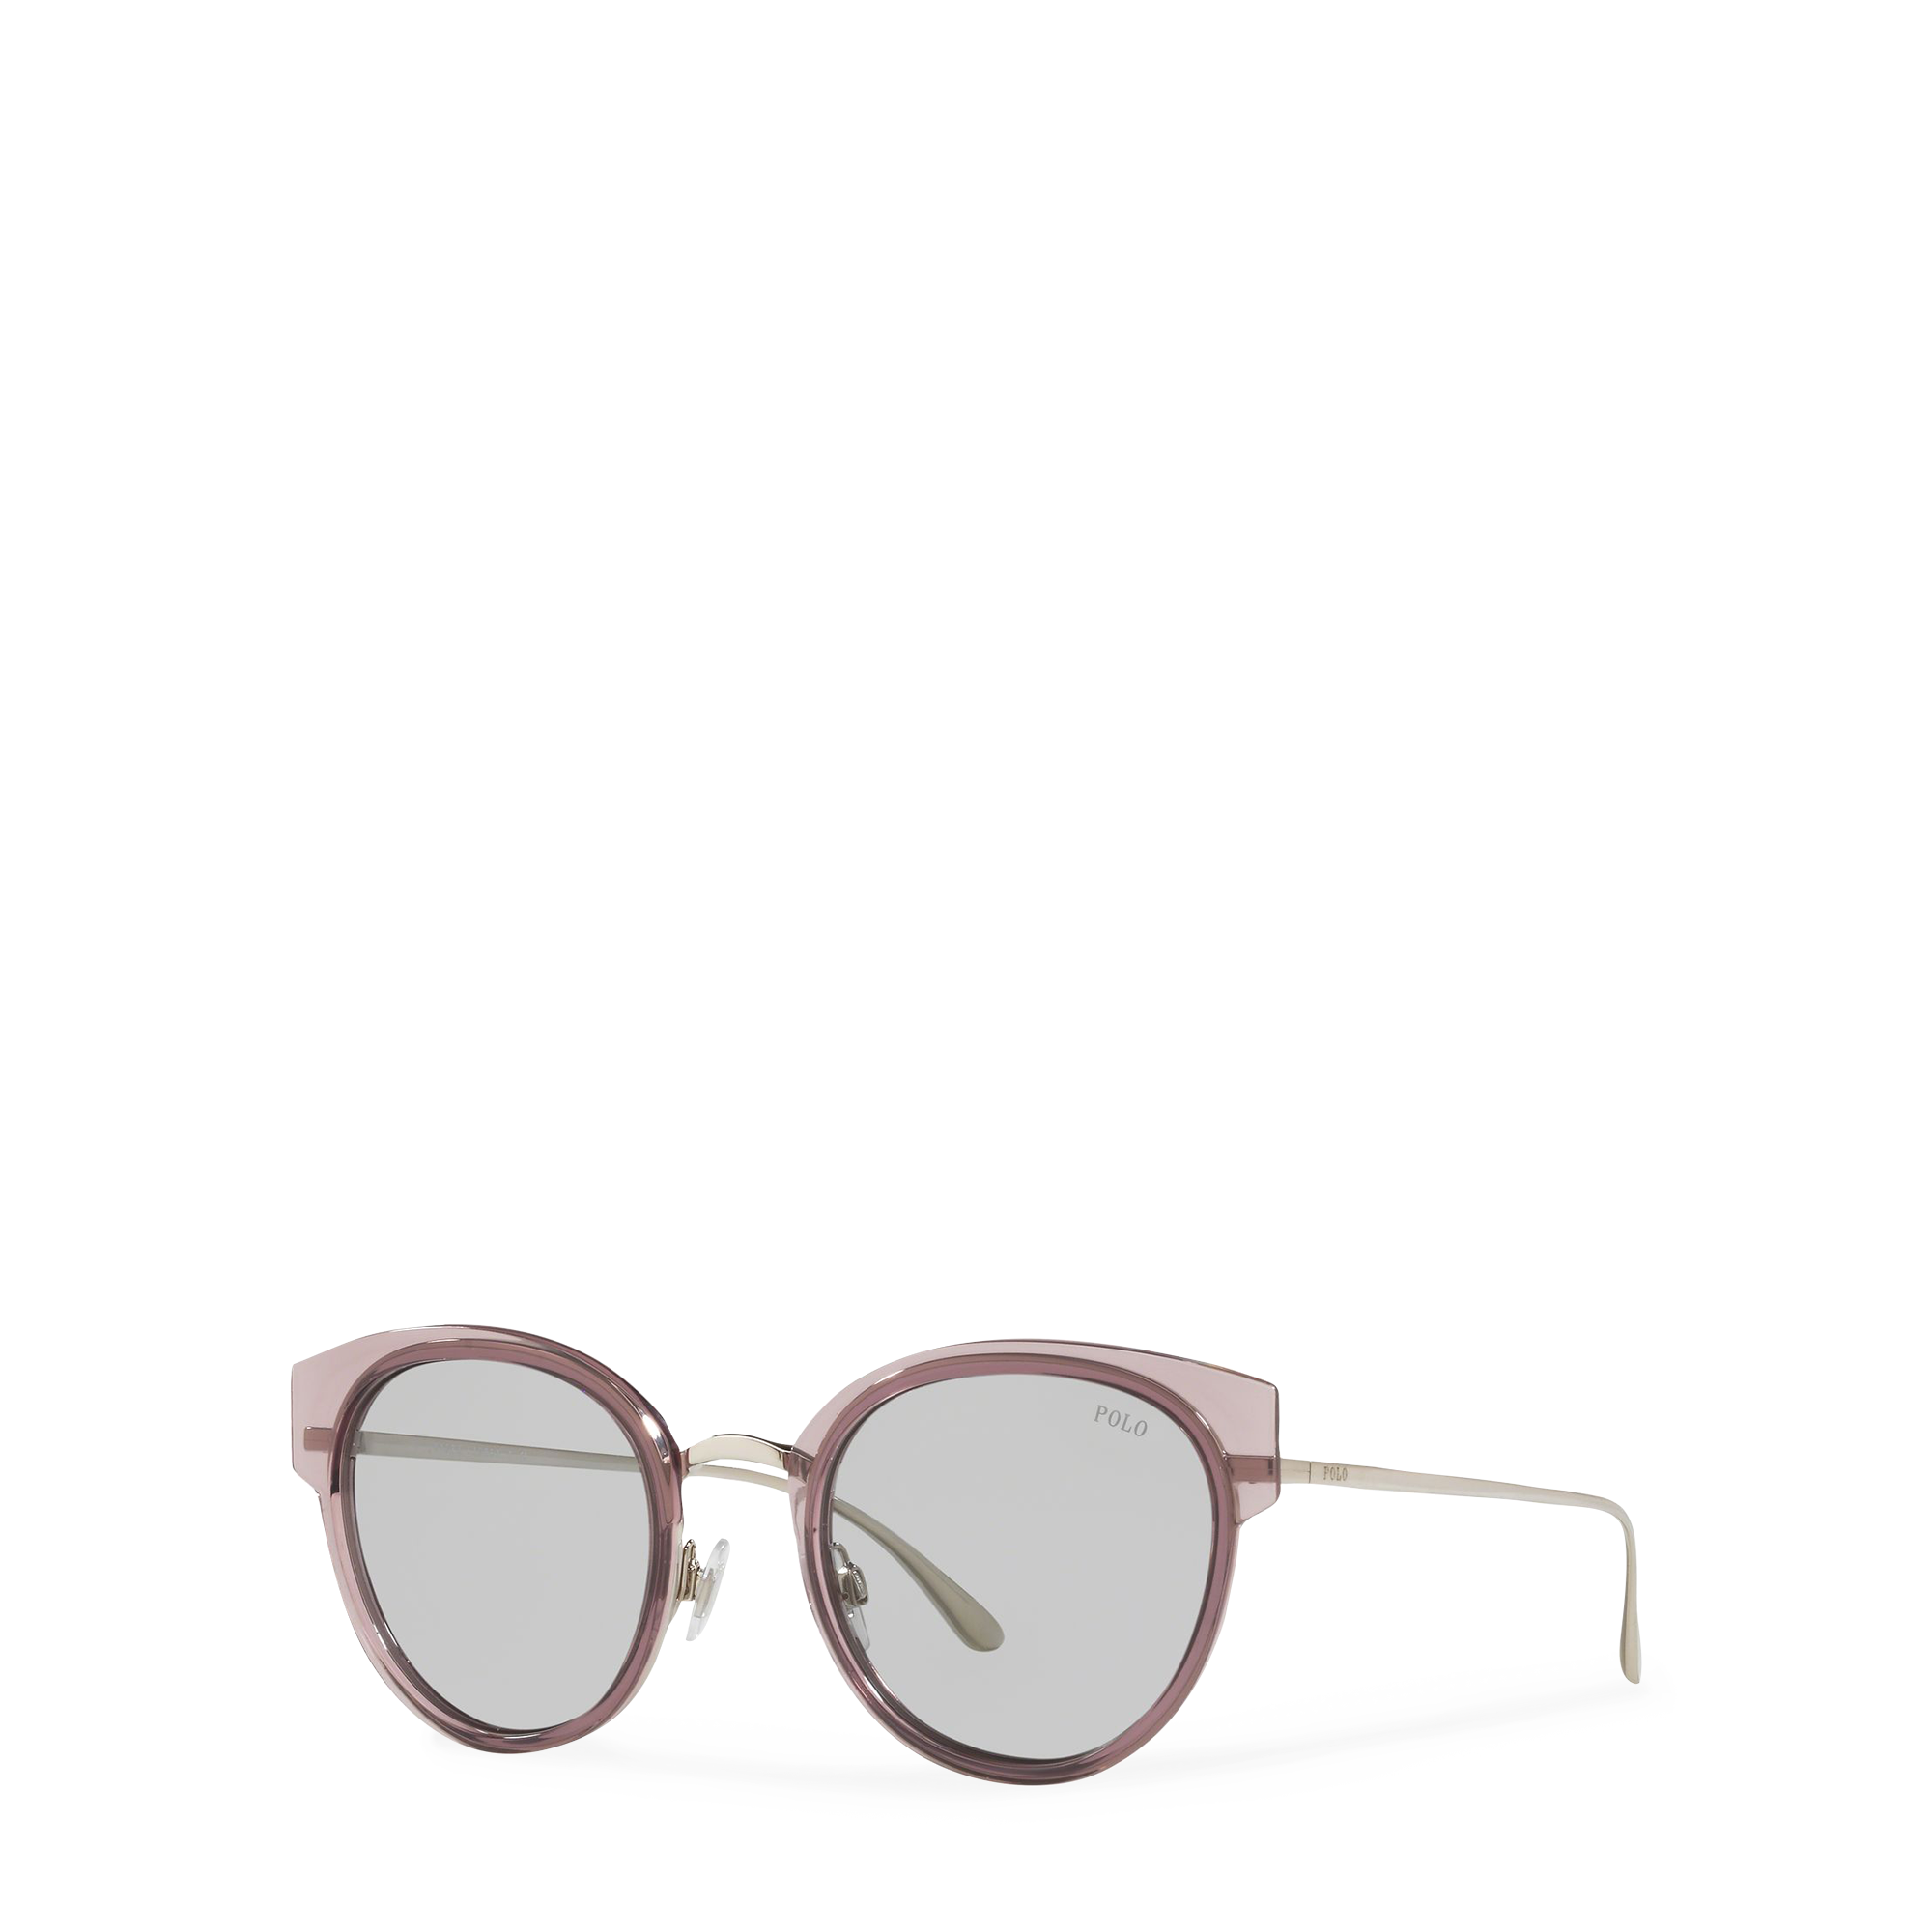 Ralph Lauren Panto Sunglasses. 2